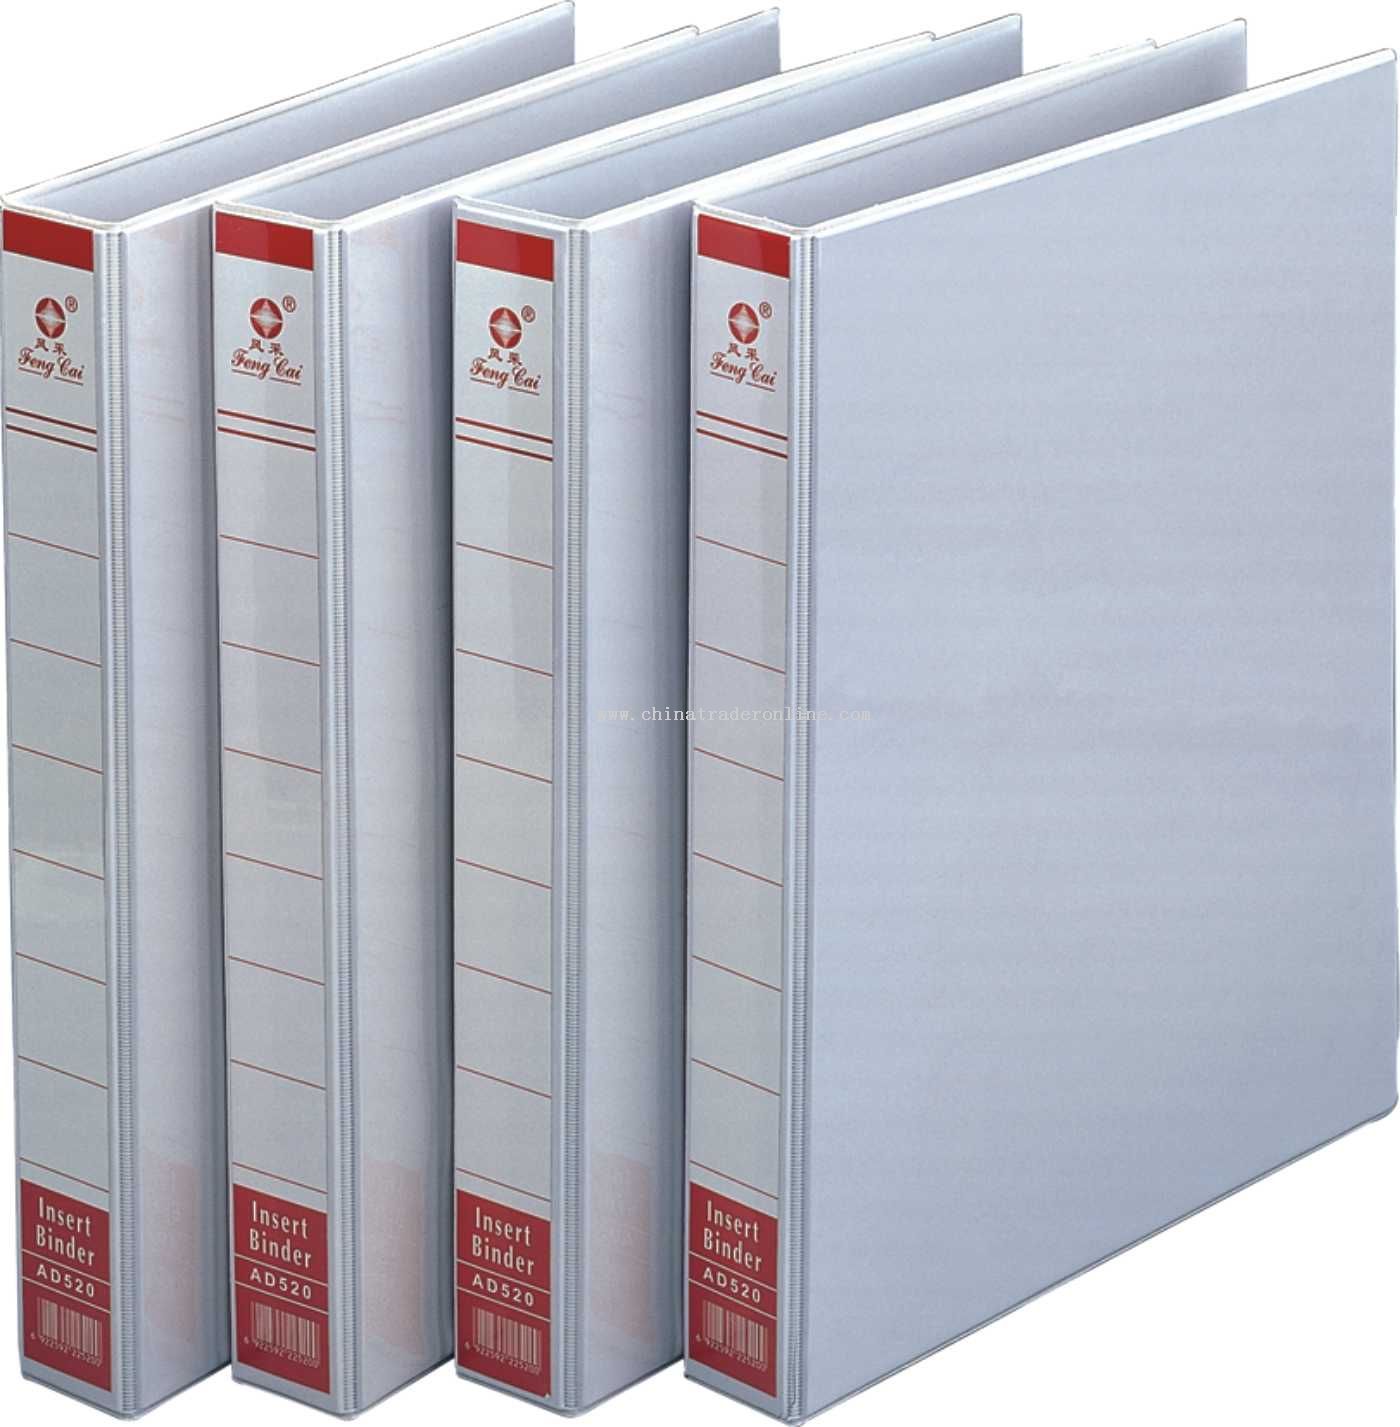 File folder ( 35mm width ridge ) from China